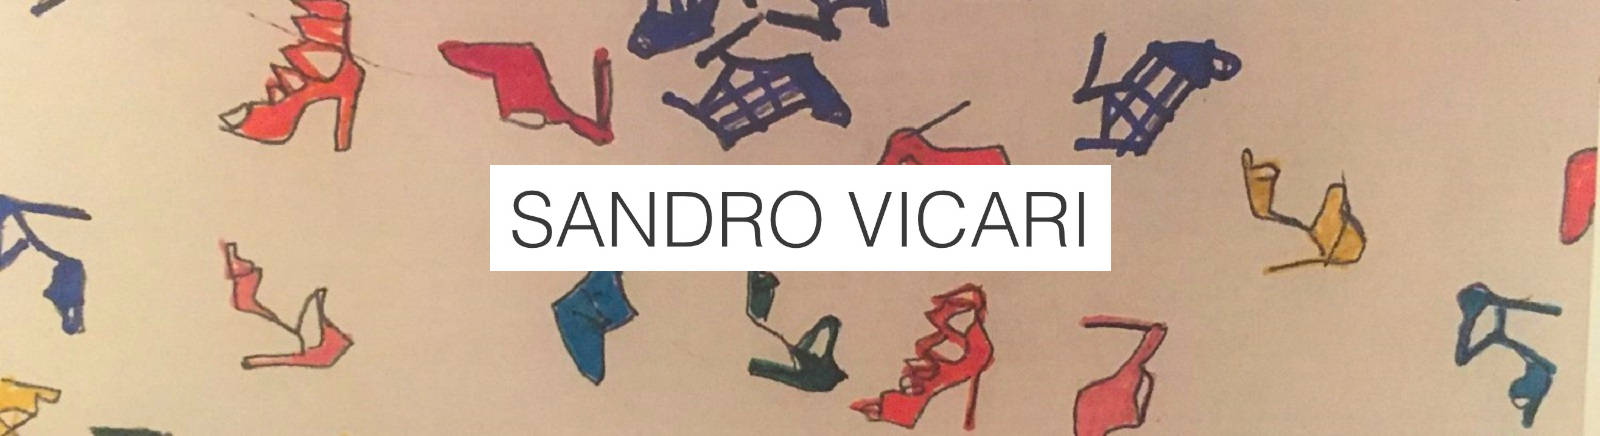 Sandro Vicari Damenschuhe online bestellen im Prange Shop